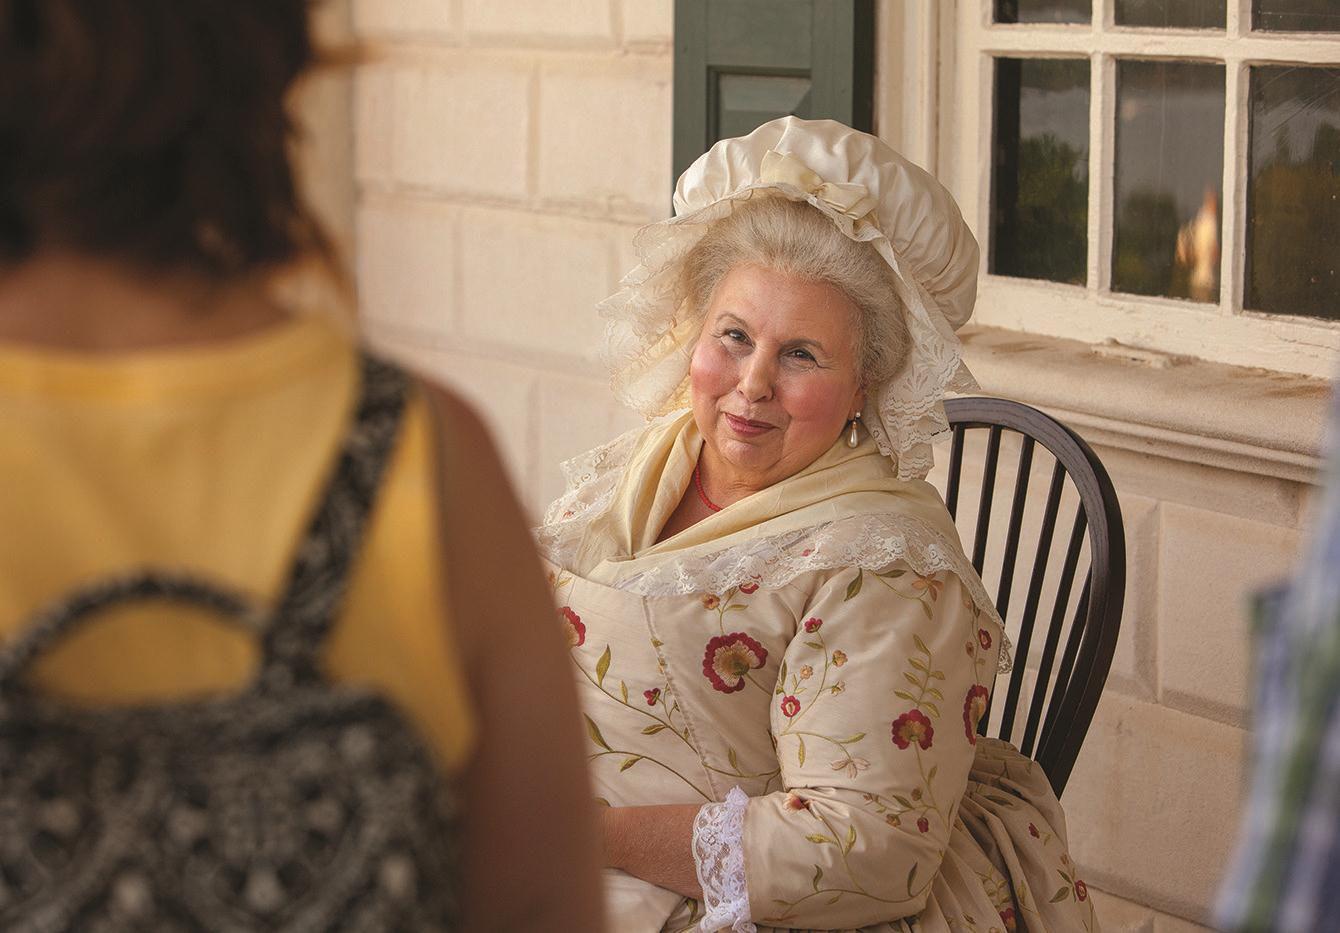 Colonial Era Dress / Martha Washington Child Costume - Parties Plus